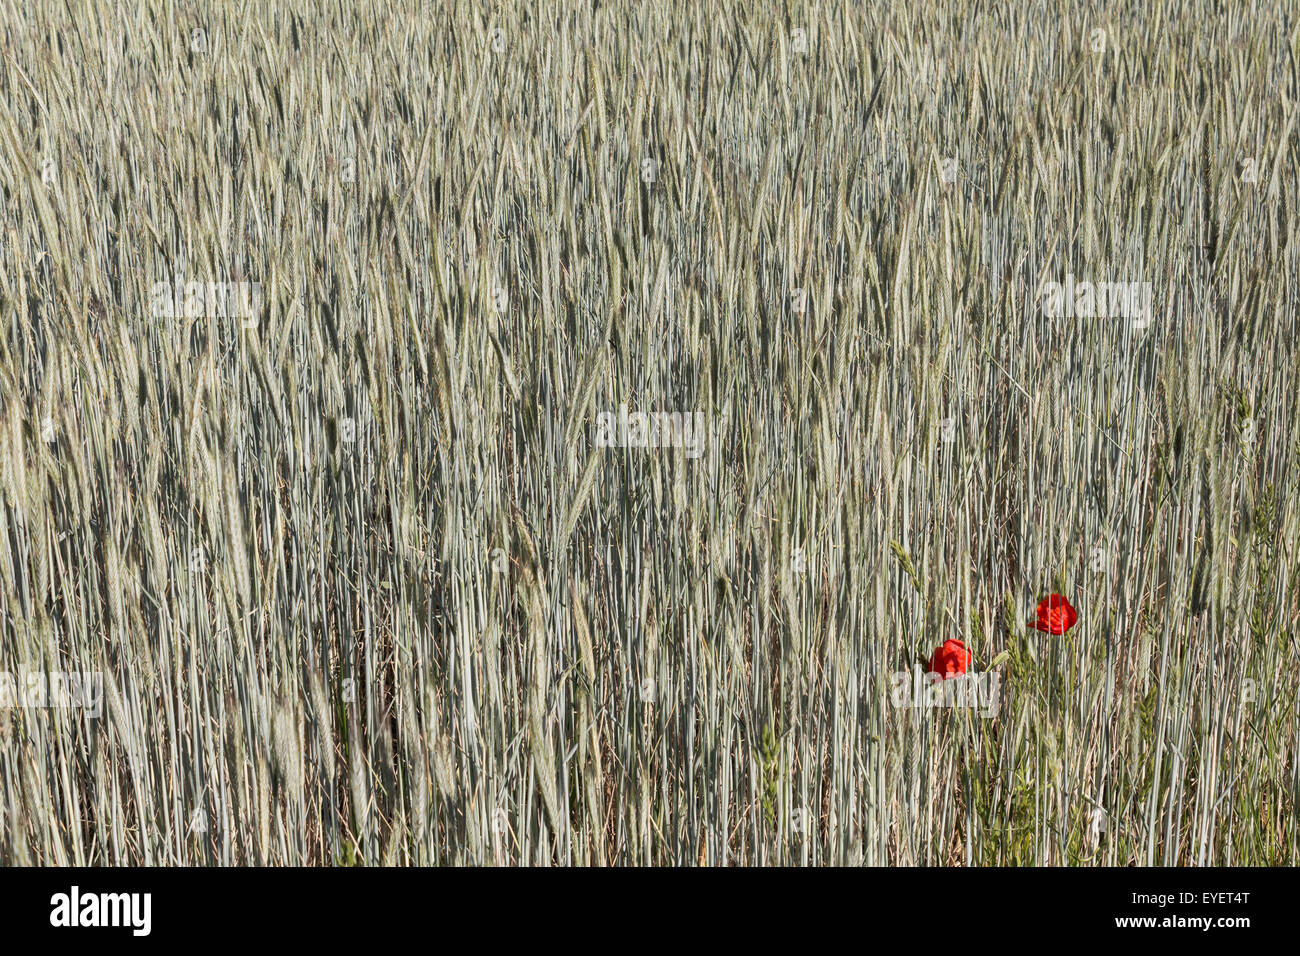 Weizenfeld und Mohn Blumen - Mohn, Getreide Stockfoto